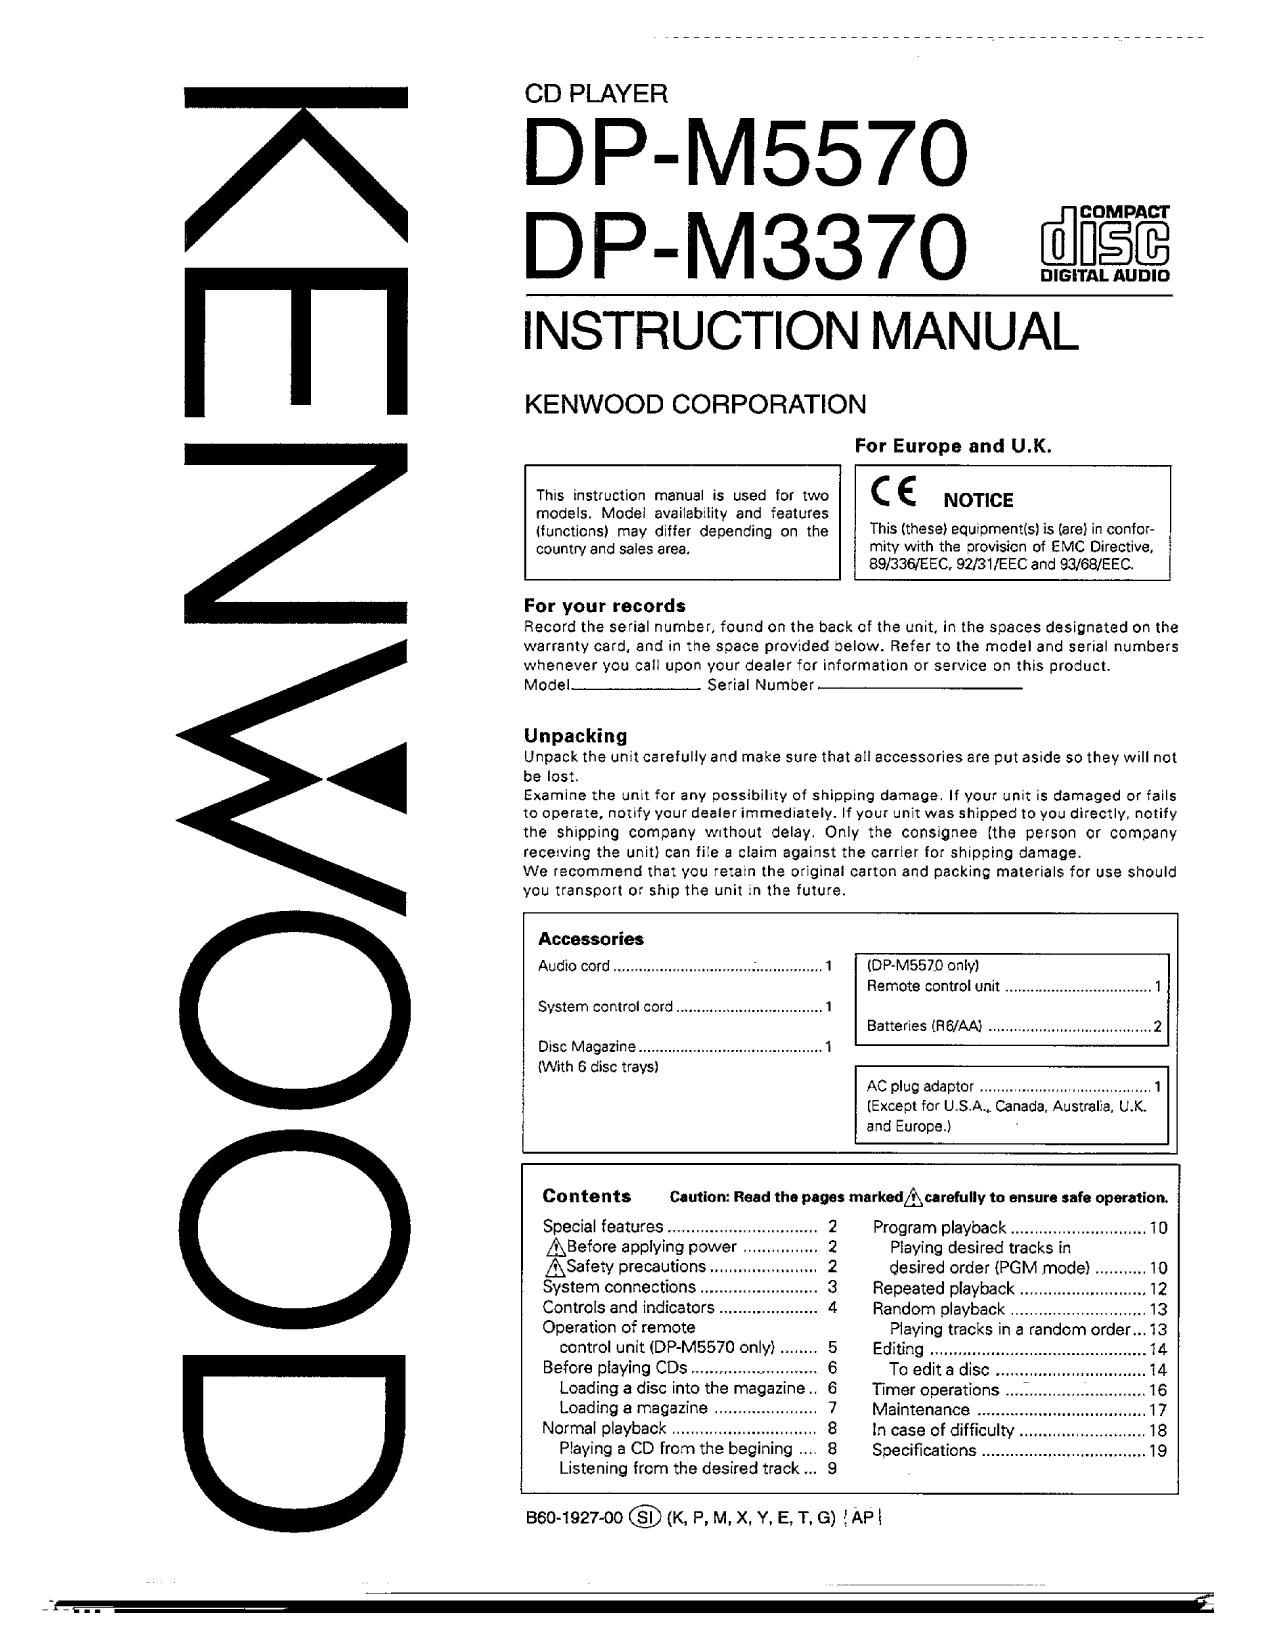 Kenwood DPM 5570 Owners Manual